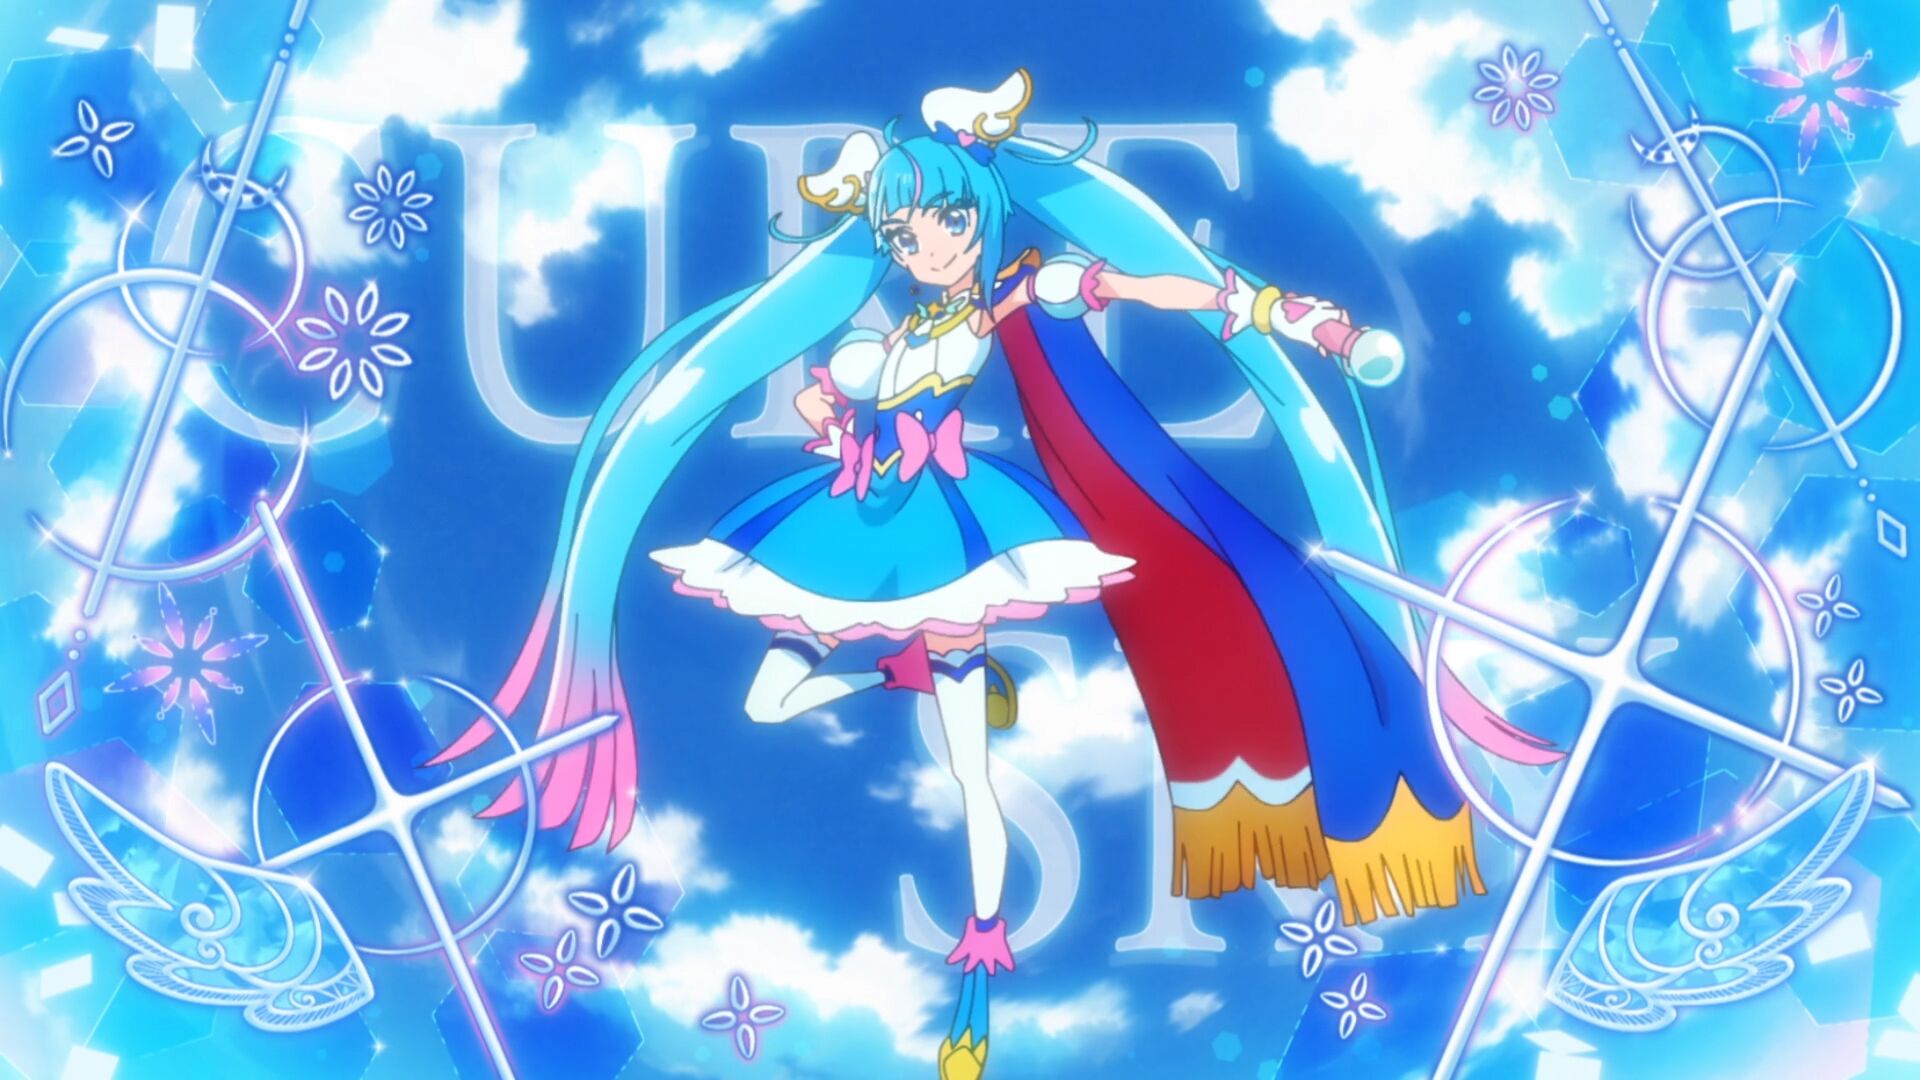 Cure Majesty - Elle (Hirogaru Sky! Precure) - Image by Kamikita